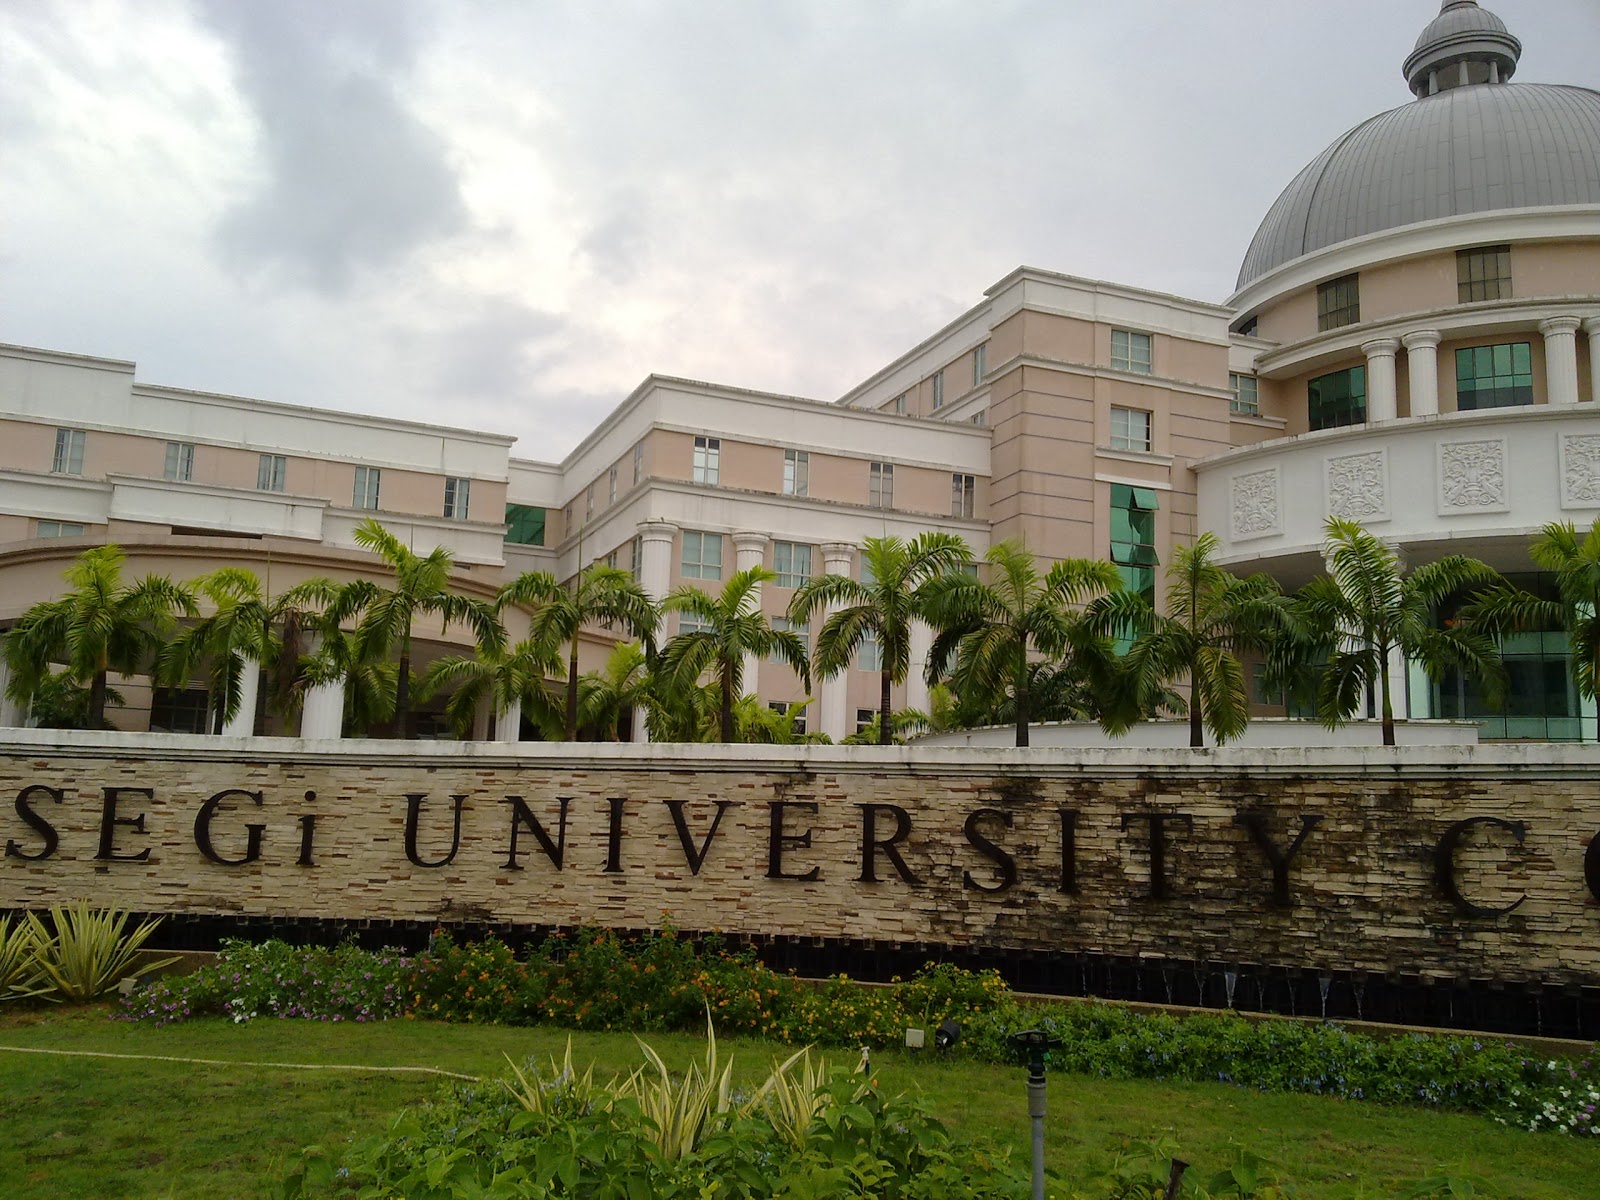 # kisah_hidup_ku_disini #: Segi University College